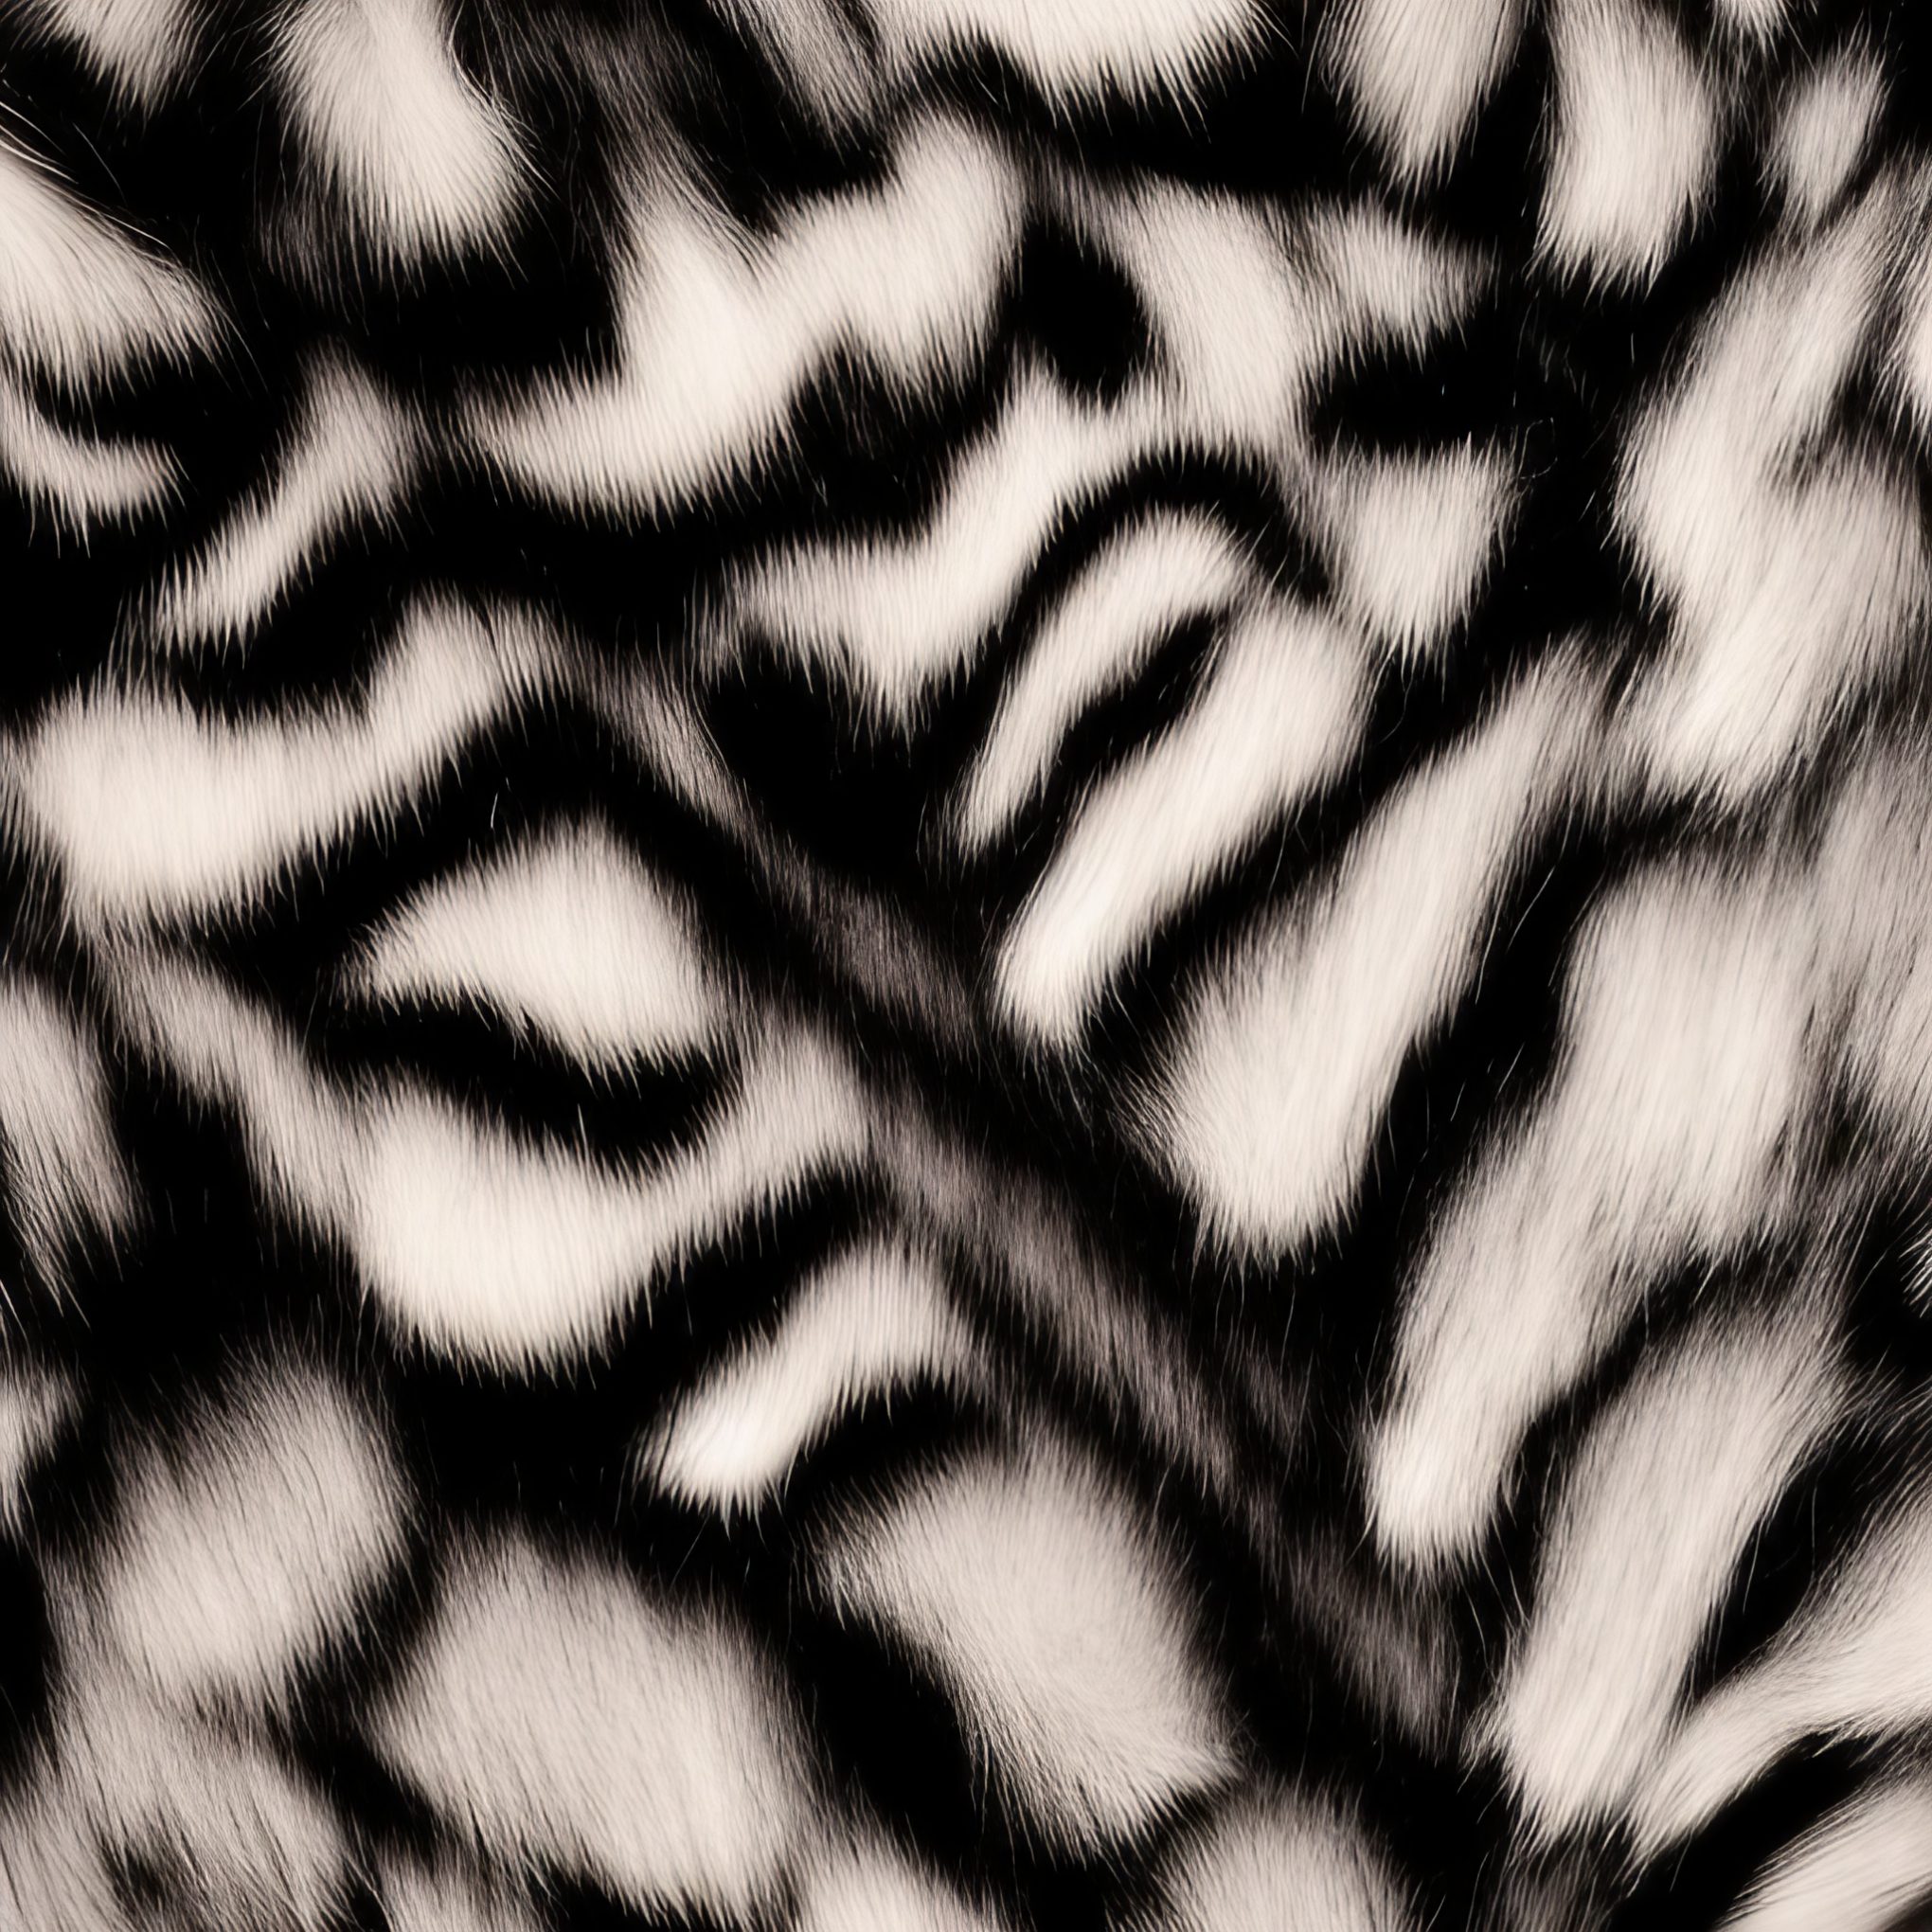 White Tiger Fur Texture free stock image